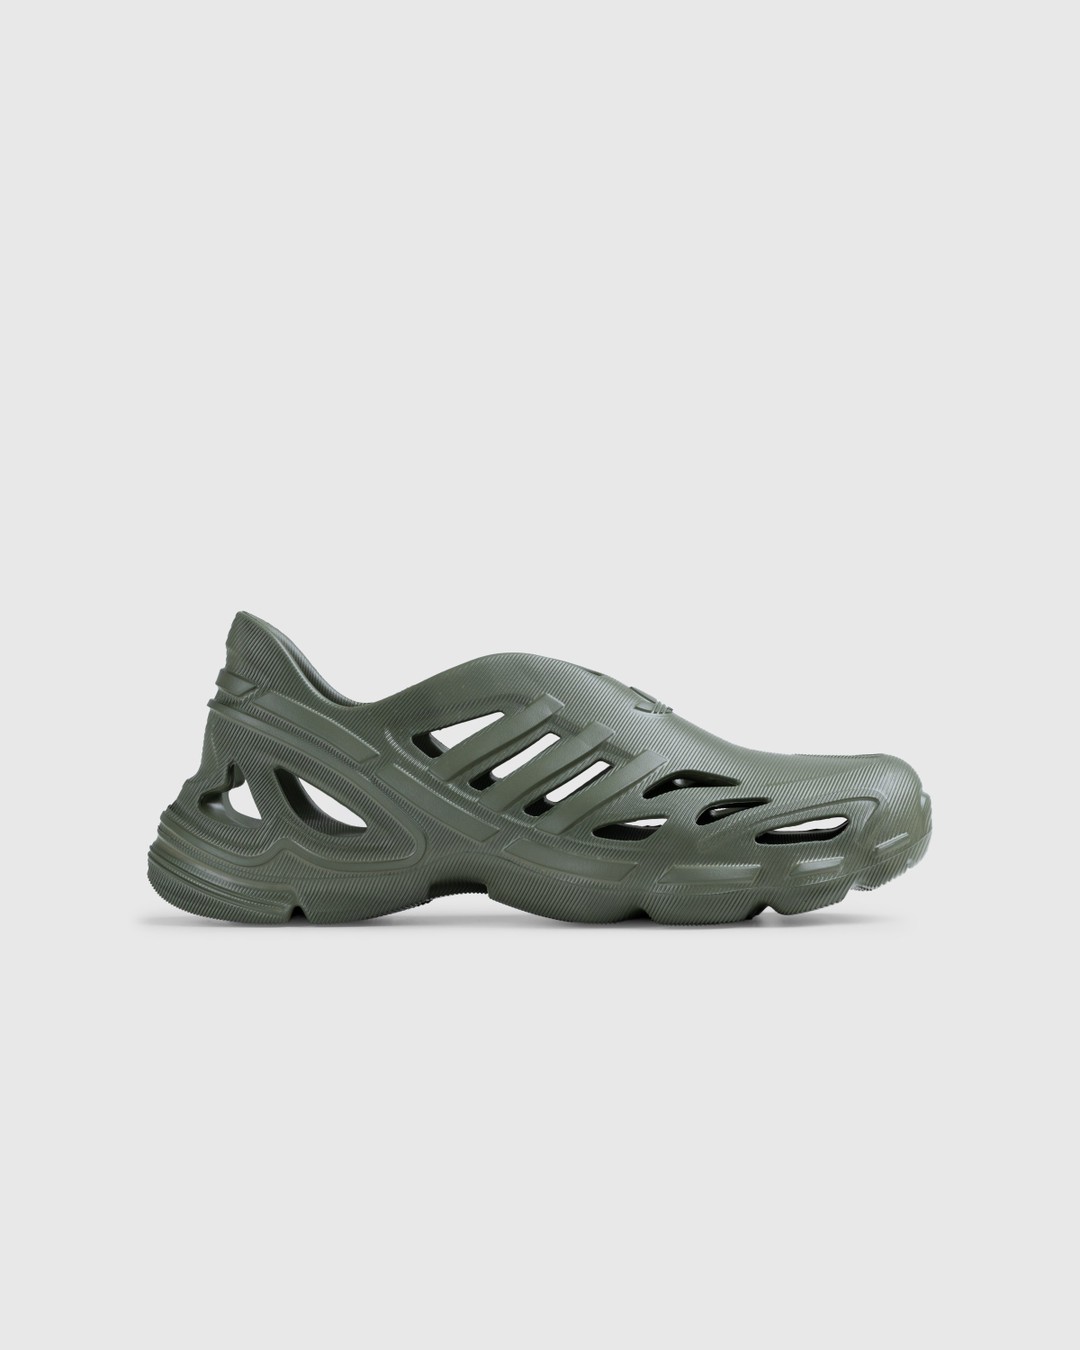 Adidas – Adifom Supernova Focus Olive - Sneakers - Green - Image 1